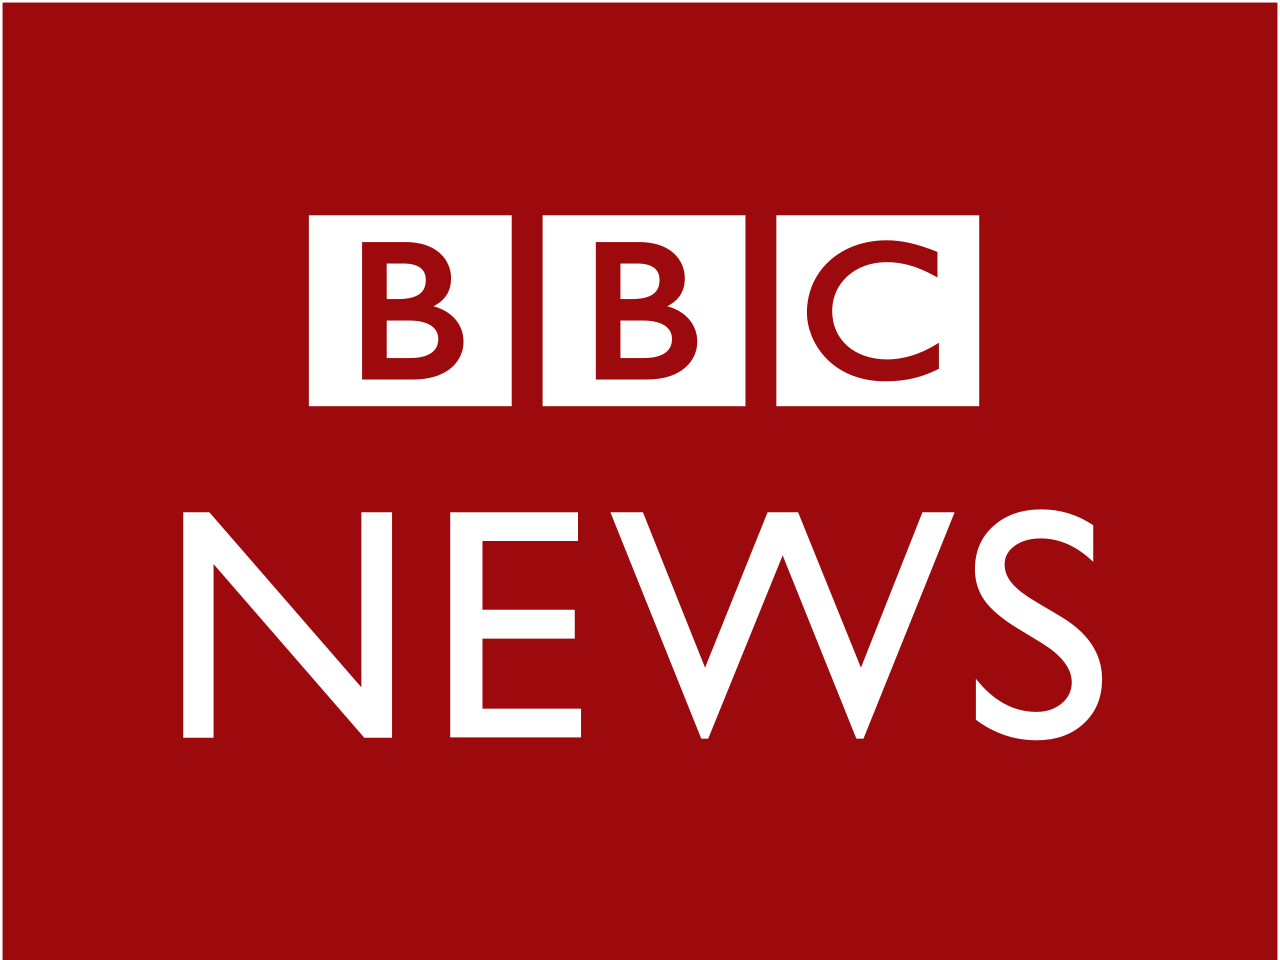 Profile BBC NEWS HD Tv Channels